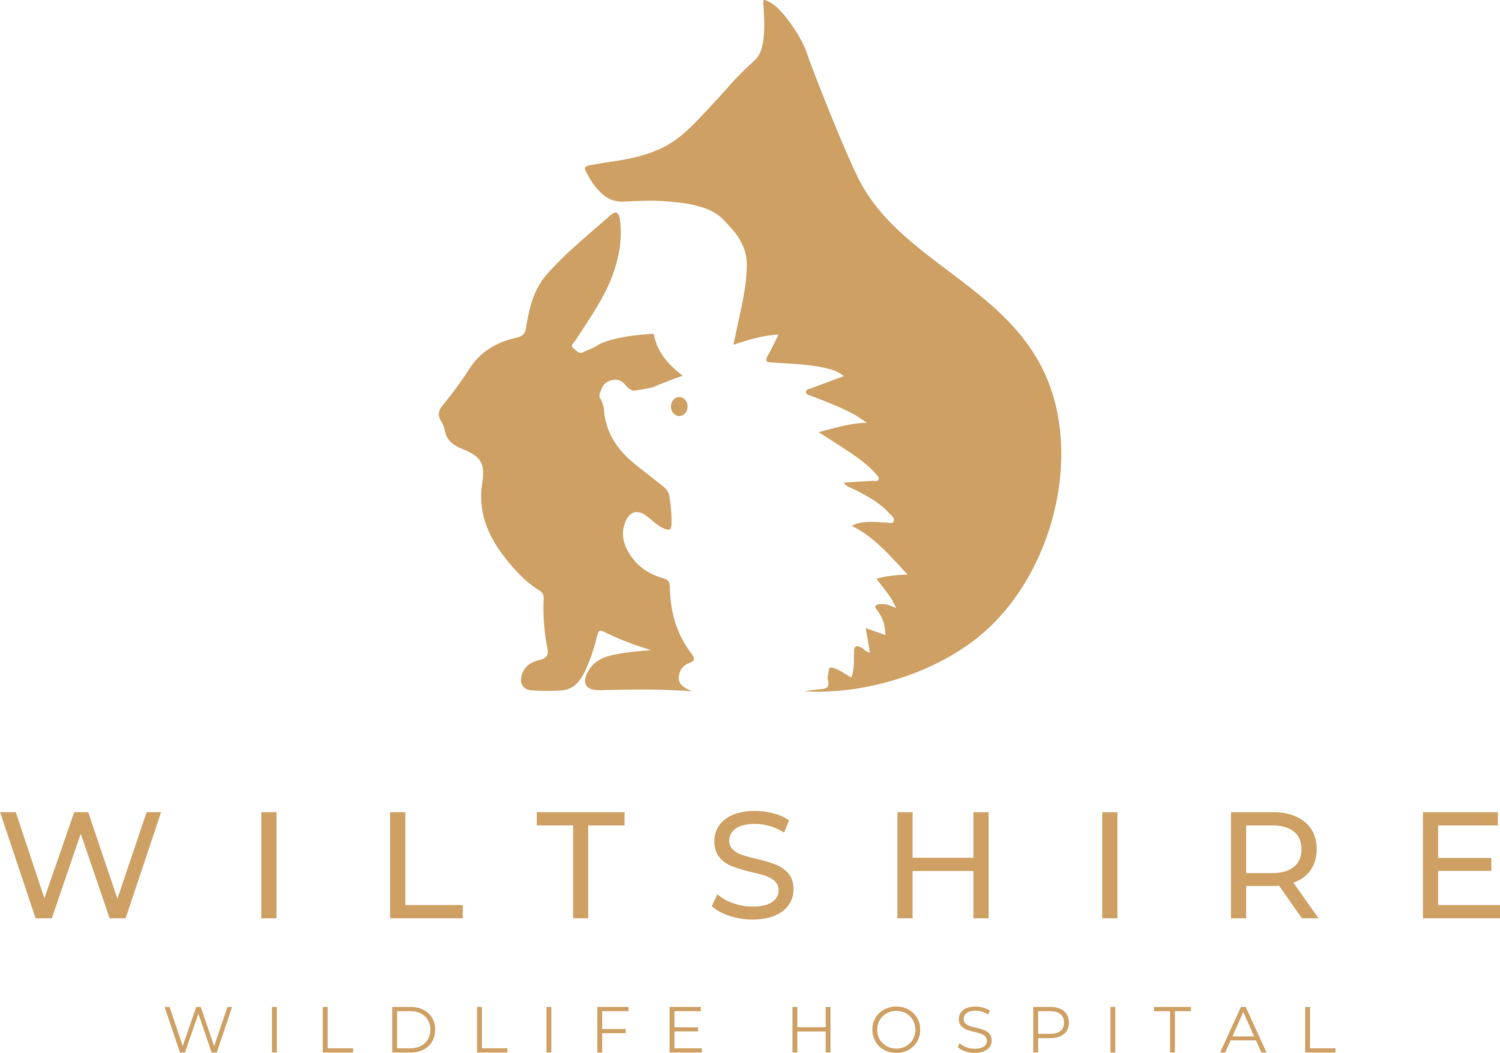 Wiltshire Wildlife Hospital